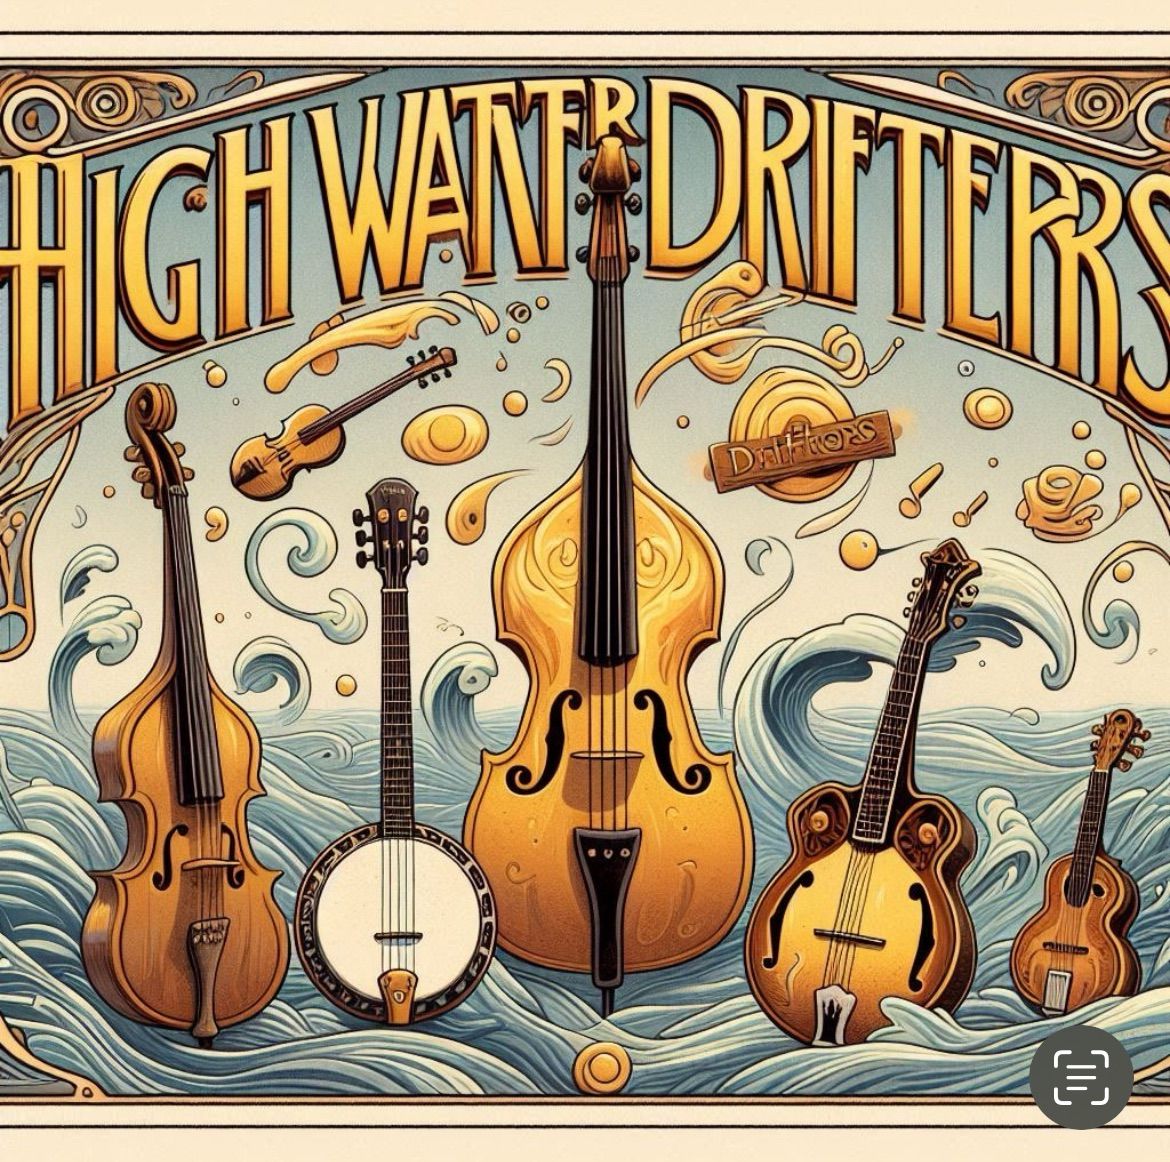 High Water Drifters - live at Shenanigan\u2019s 